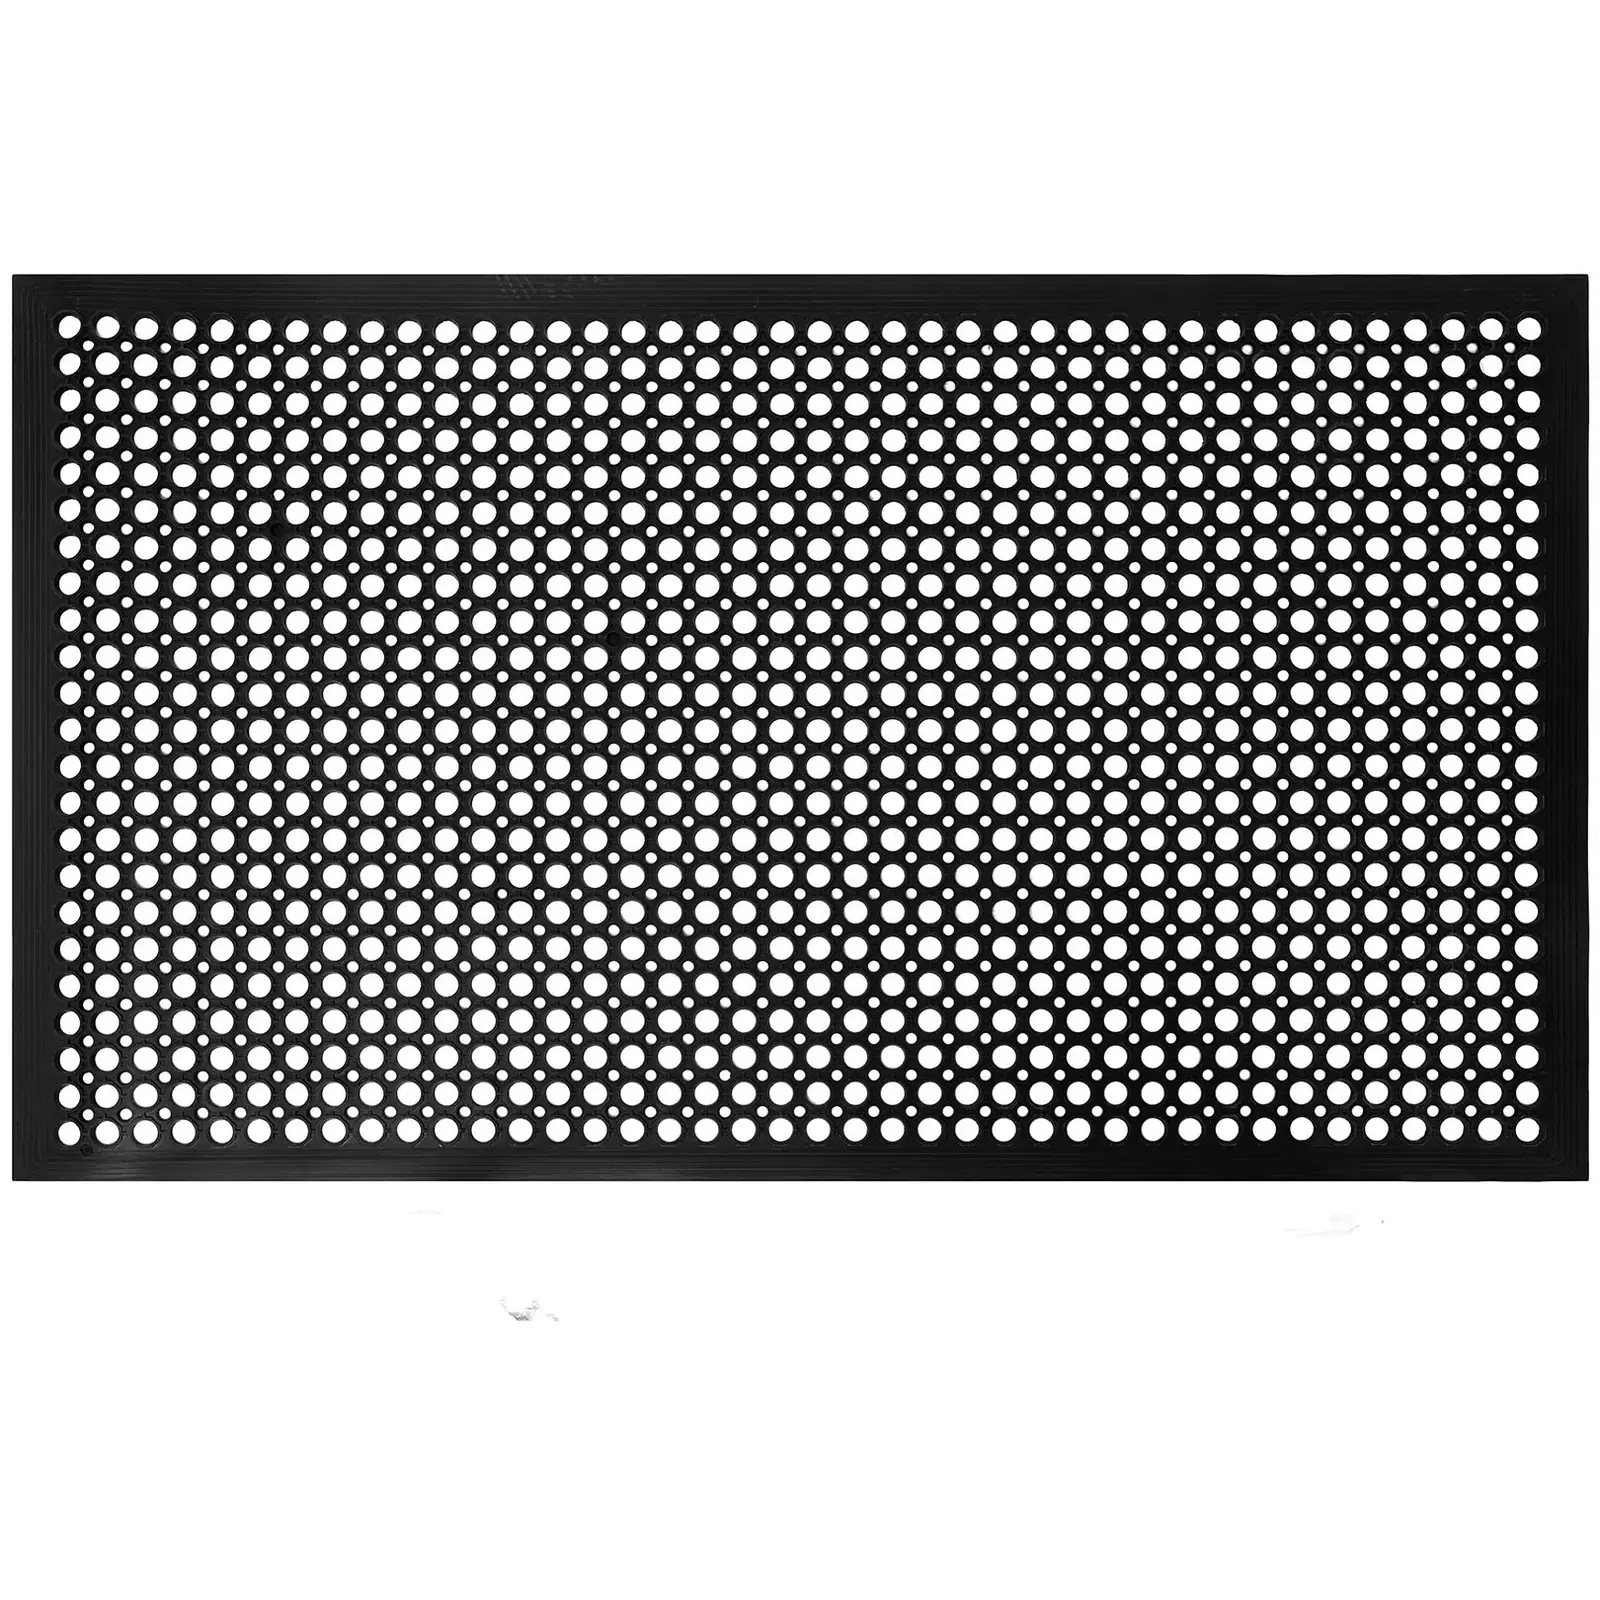 Ringgummimatte - 152 x 92 x 2 cm - schwarz